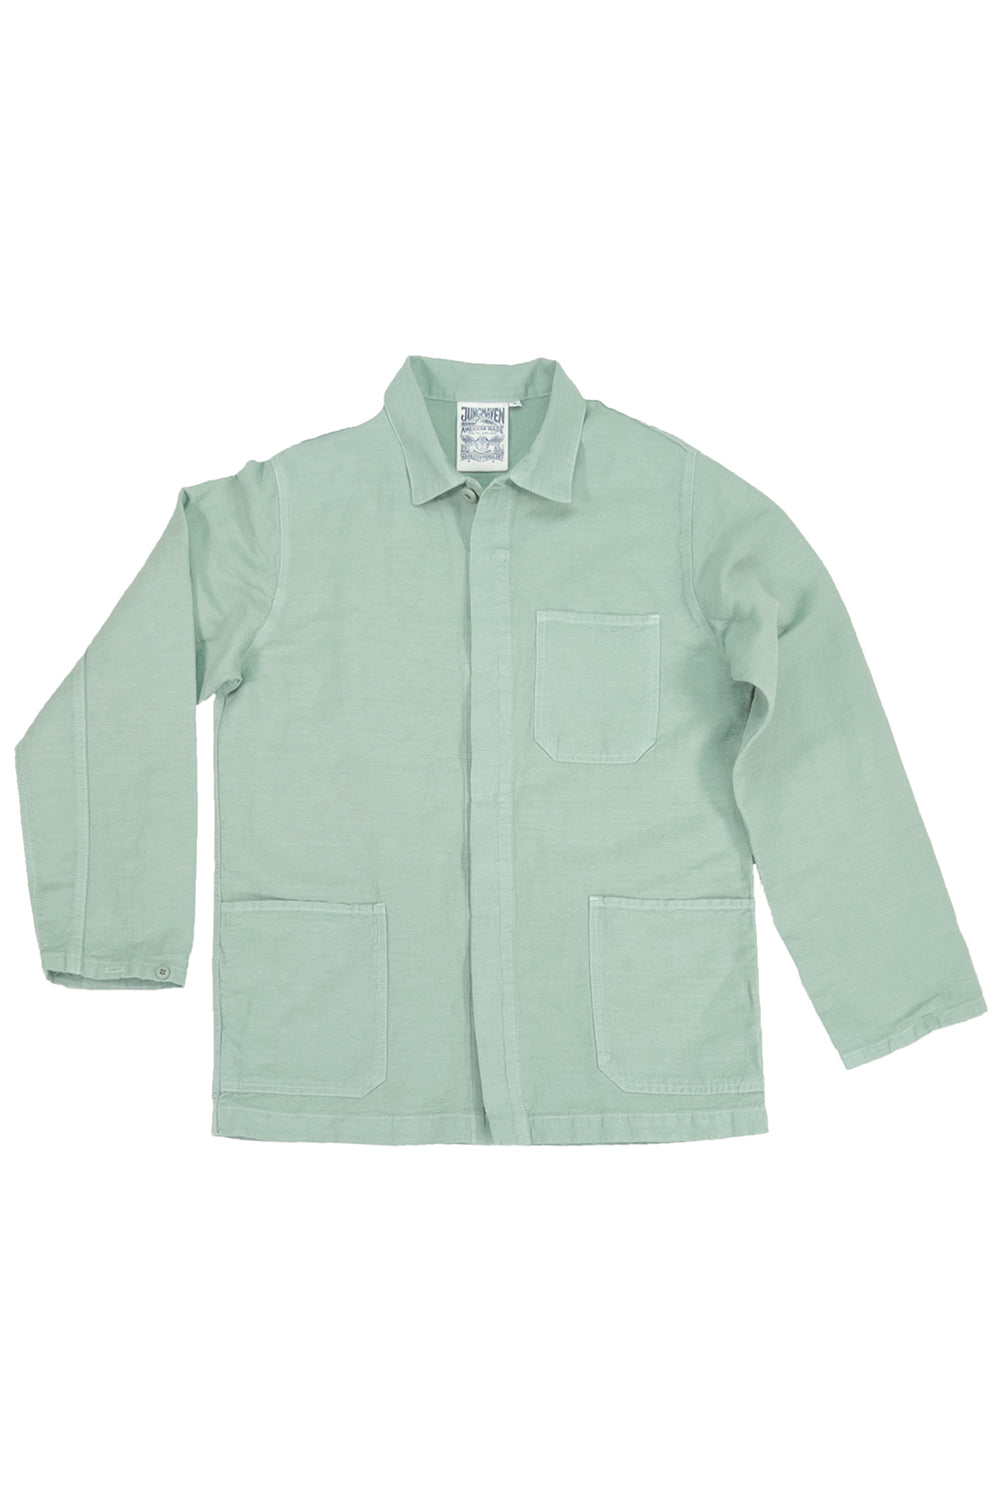 Cascade Jacket | Jungmaven Hemp Clothing & Accessories / Color: Sage Green